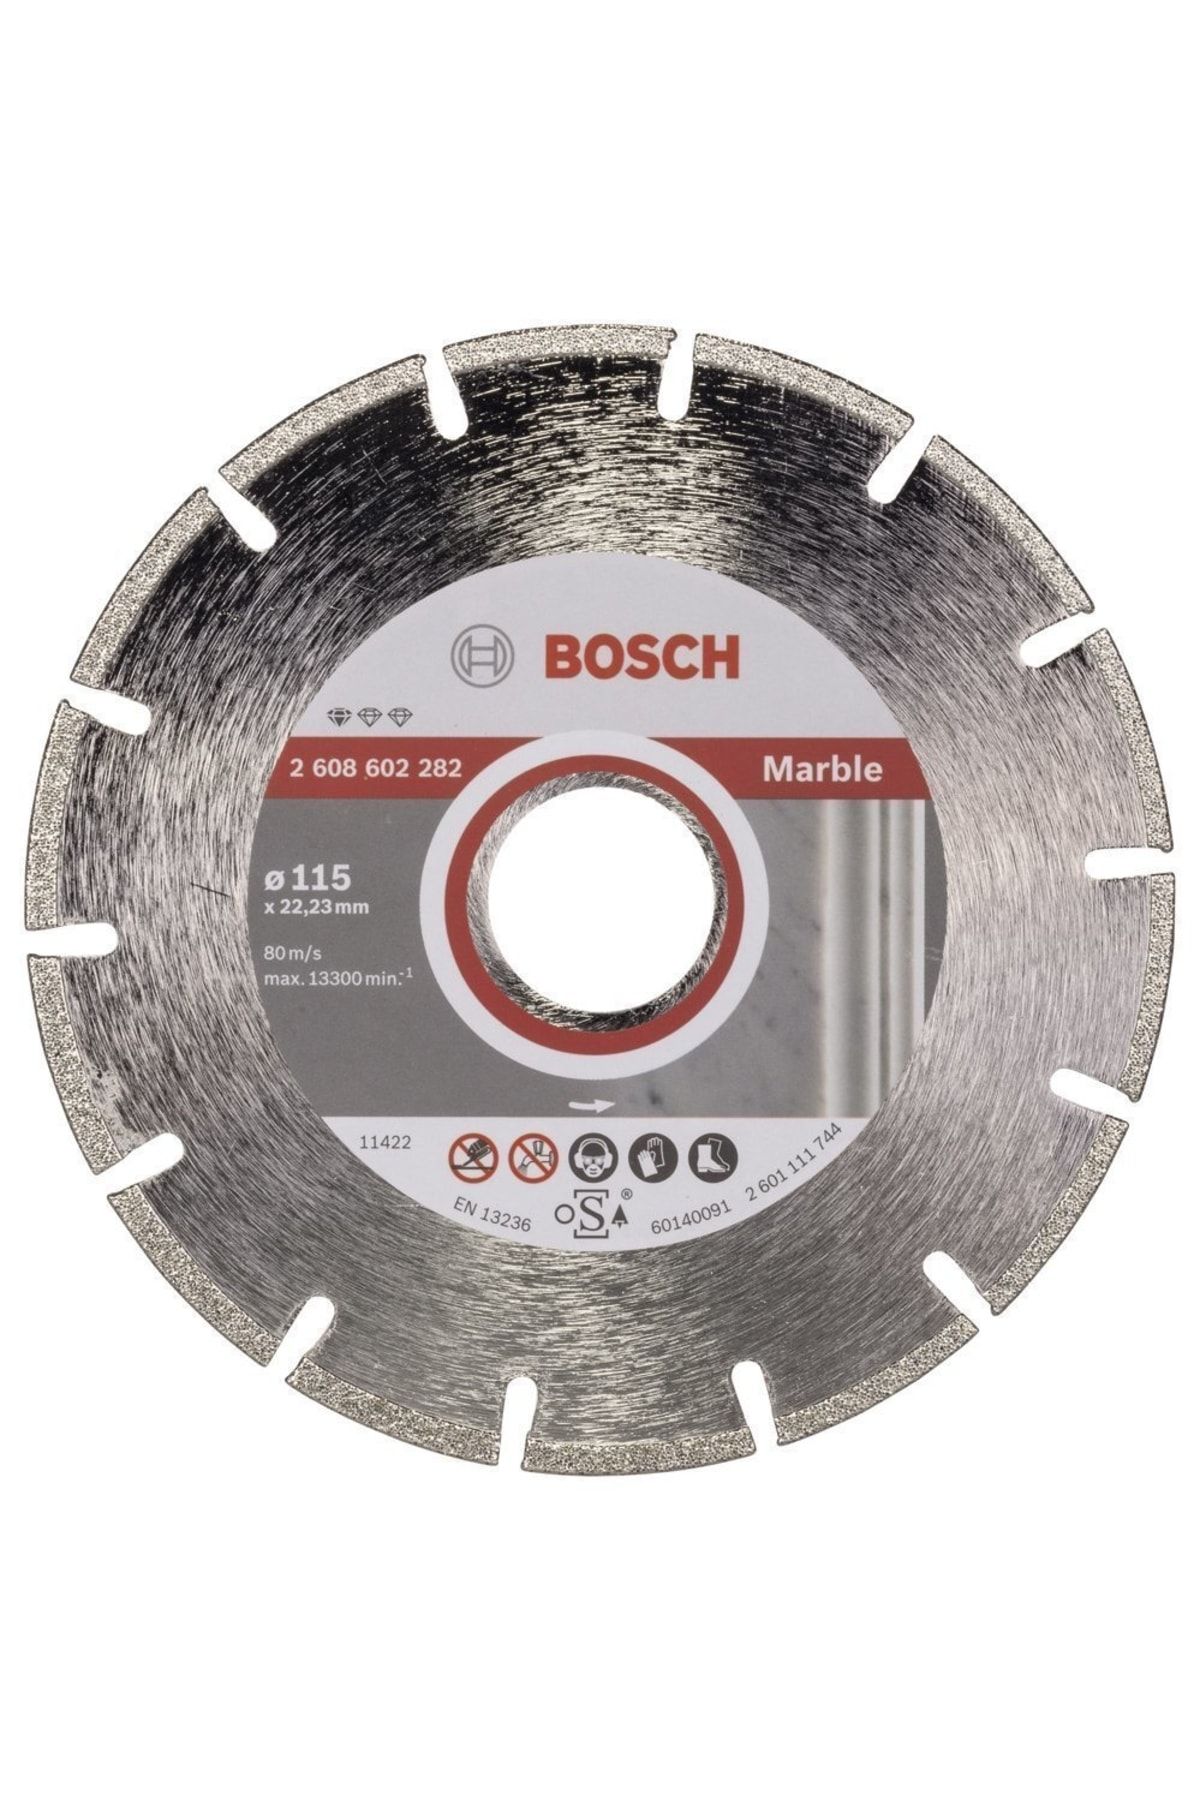 Bosch Marble Taş ve Plastik Kesme Diski Elmas 115mm